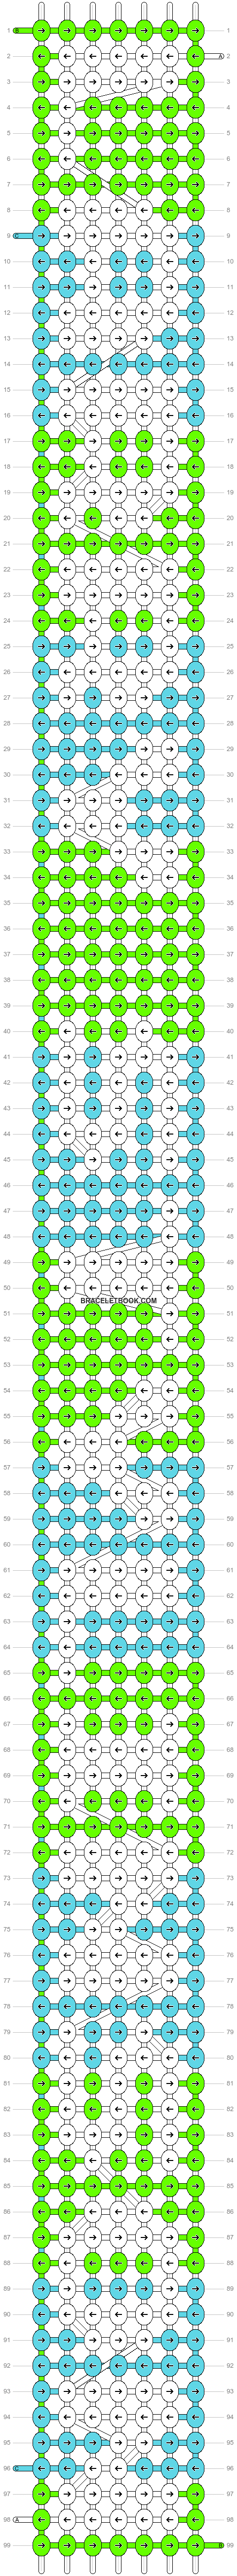 Alpha pattern #30740 variation #20224 pattern